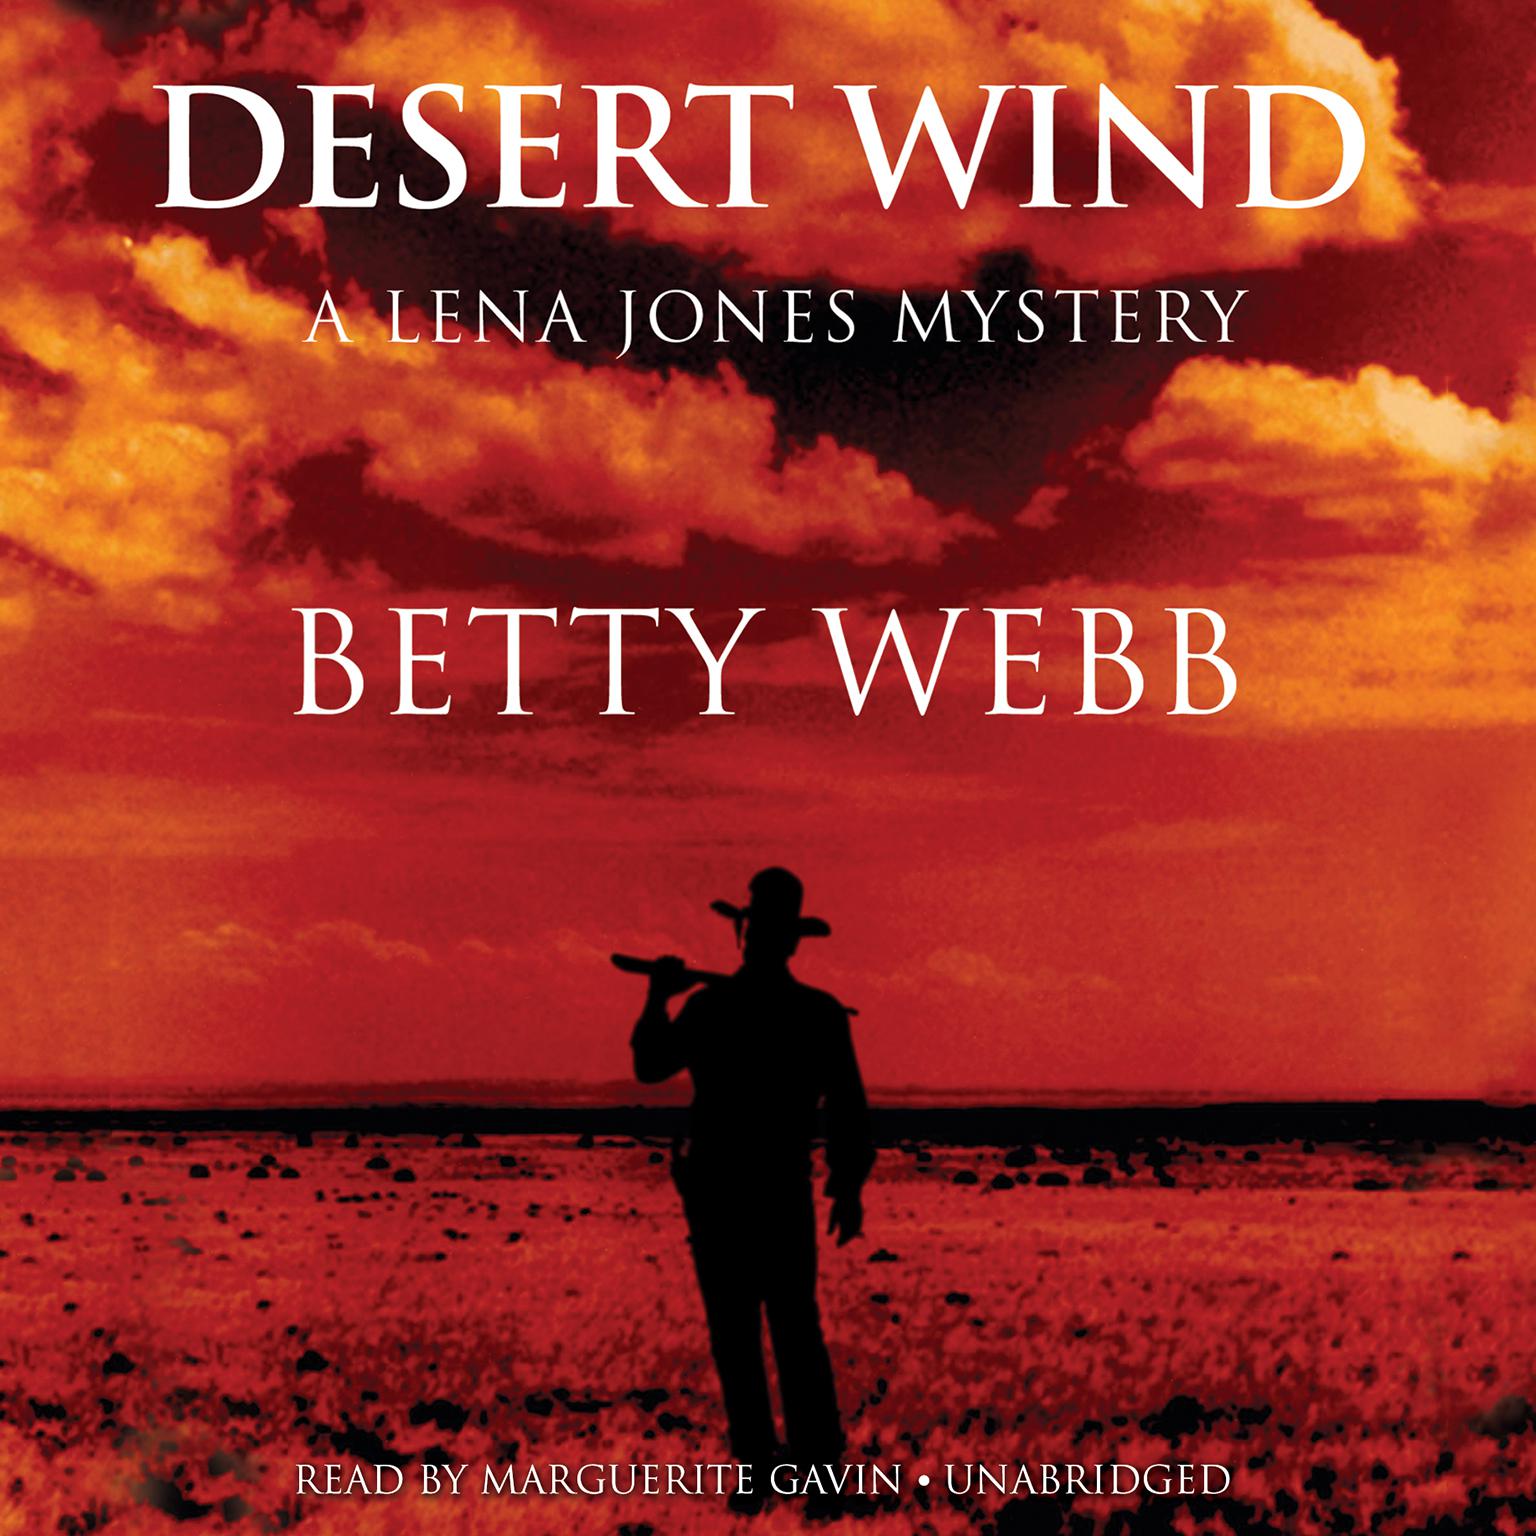 Desert Wind: A Lena Jones Mystery Audiobook, by Betty Webb